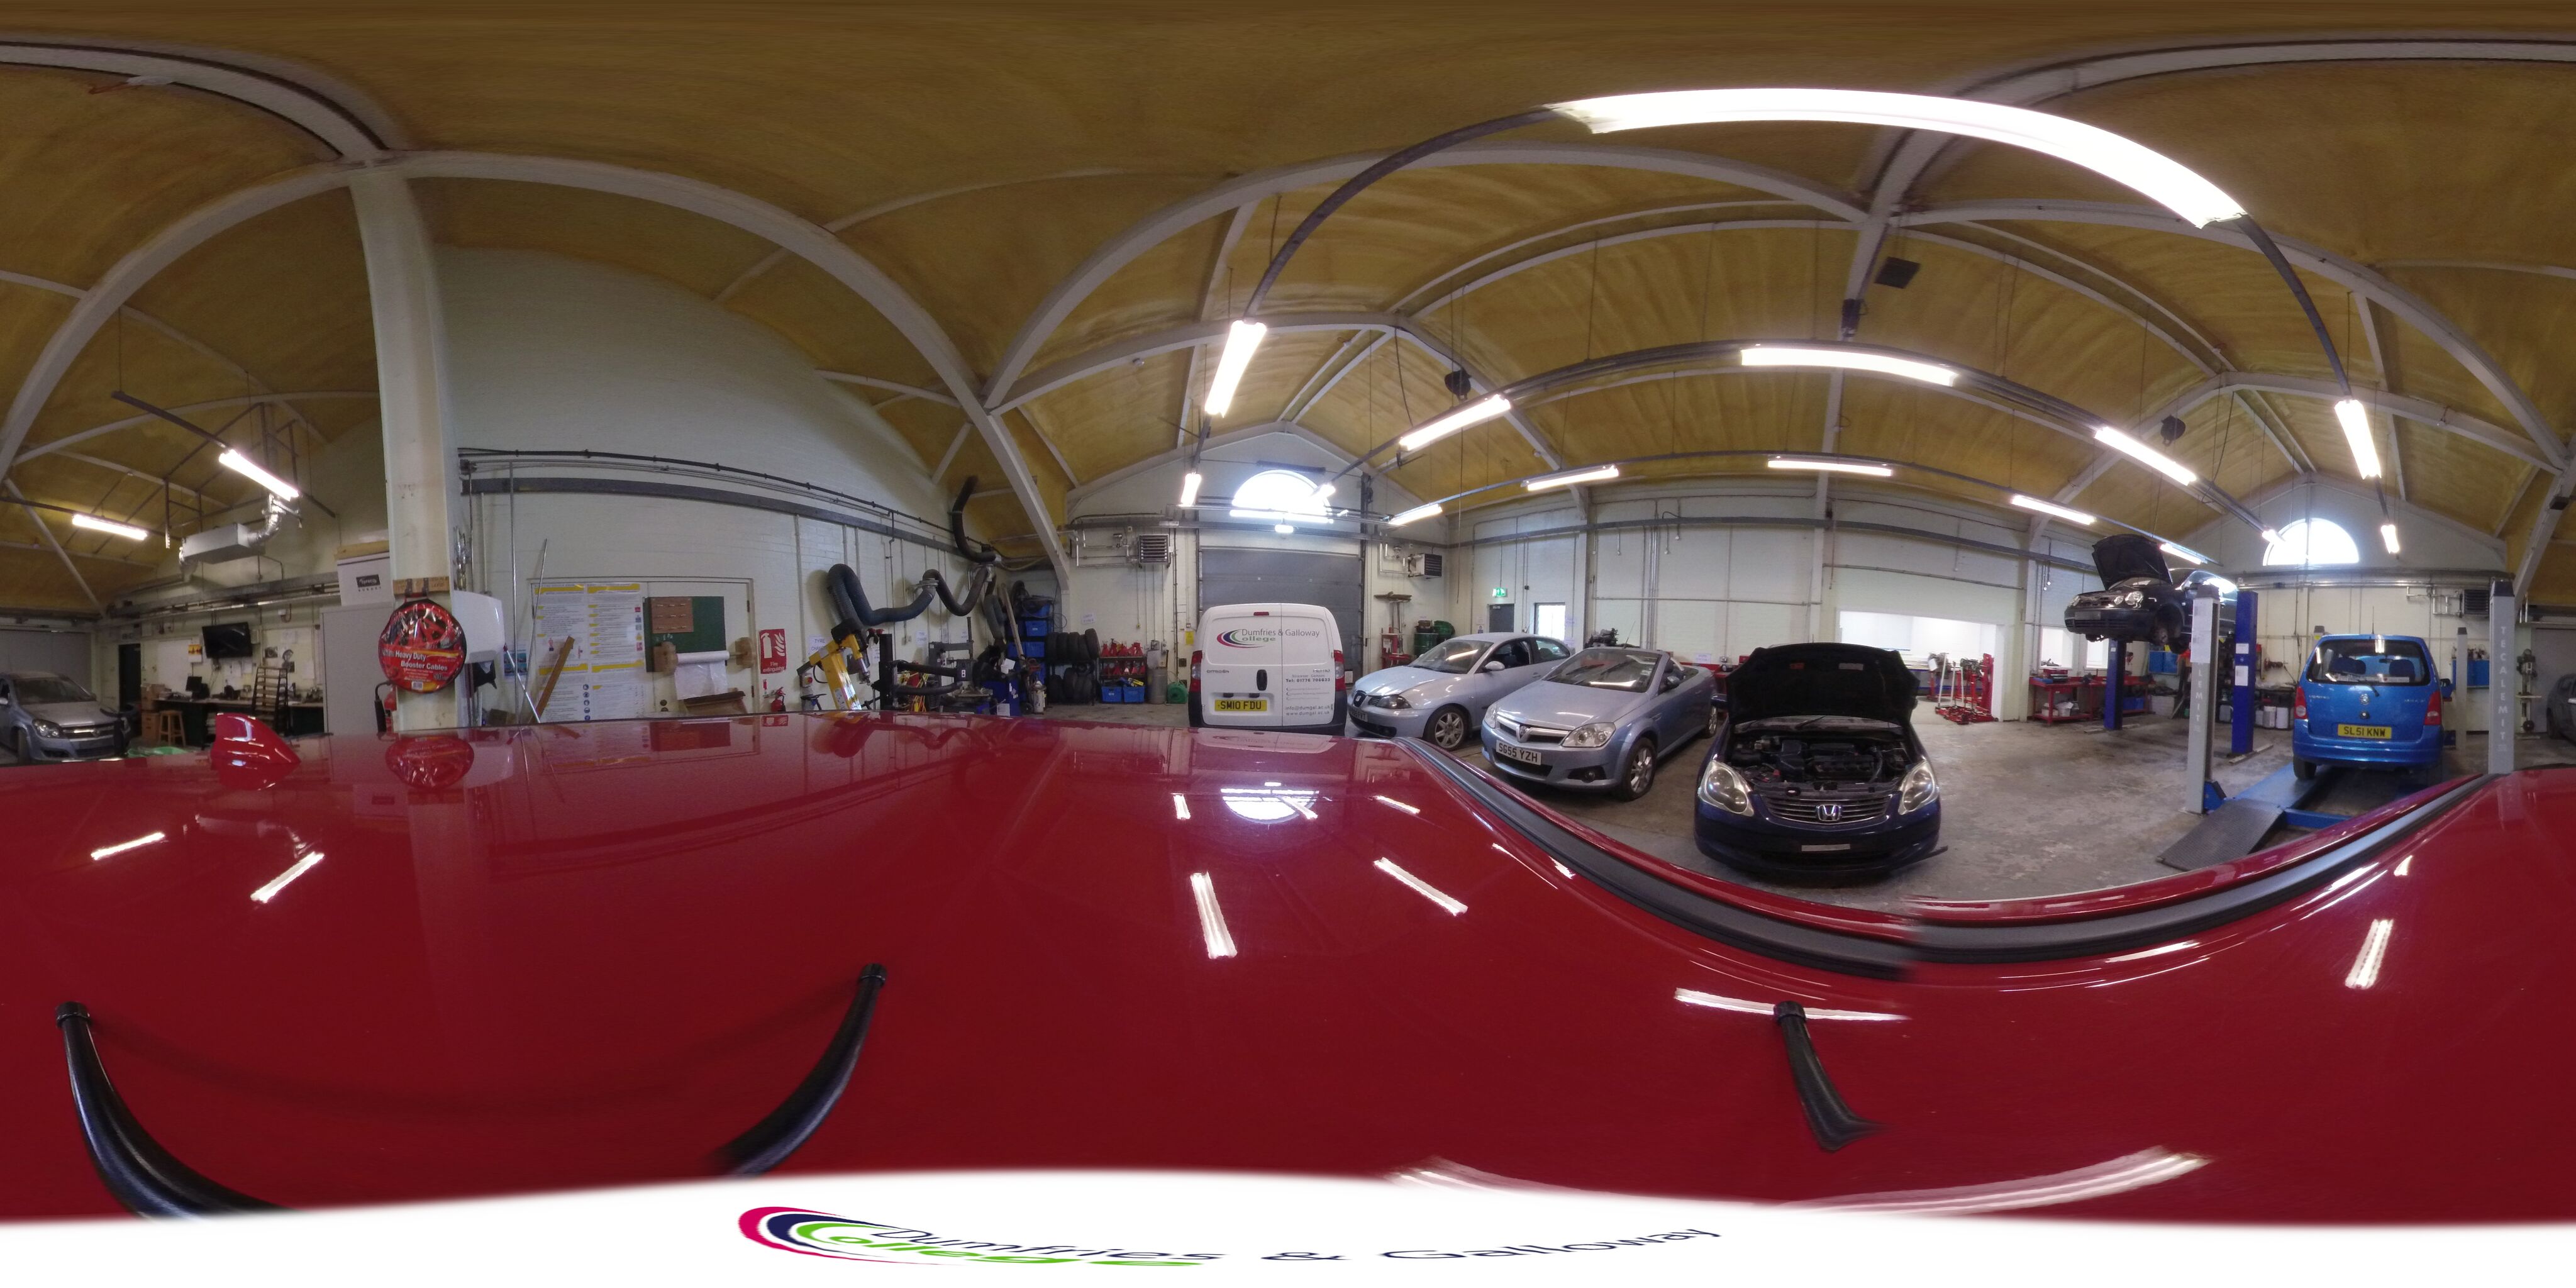 360 Photo of Motor Vehicle Workshop 2 (Stranraer)